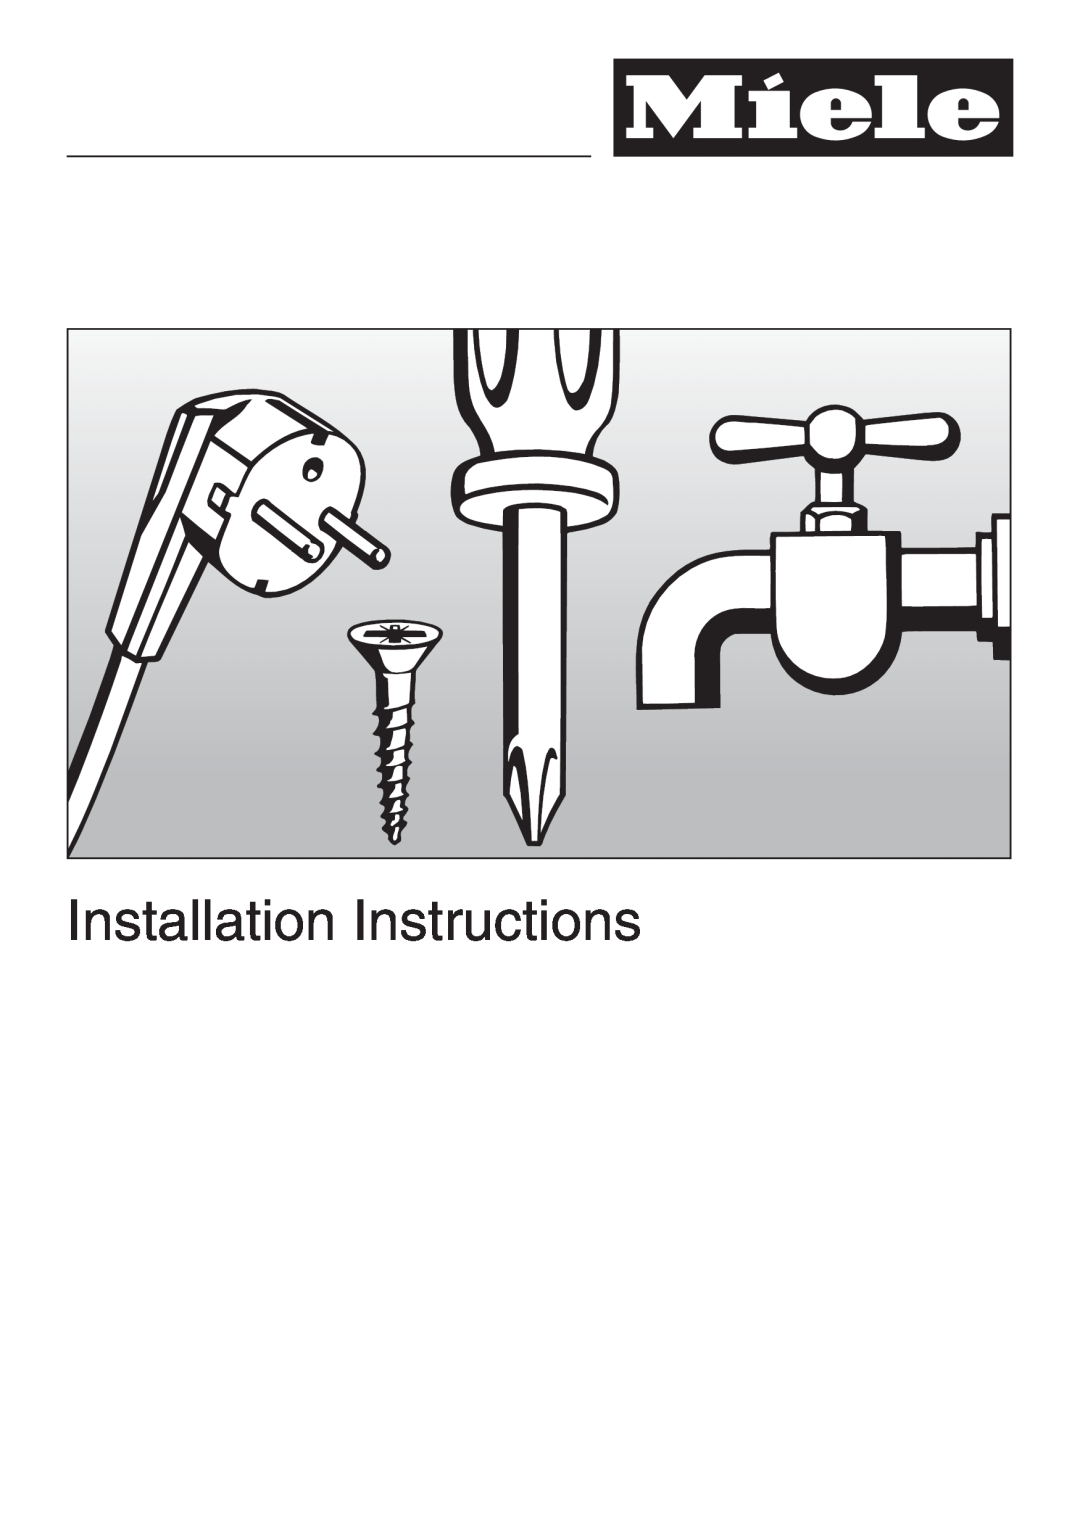 Miele DA409, DA408 installation instructions Installation Instructions 